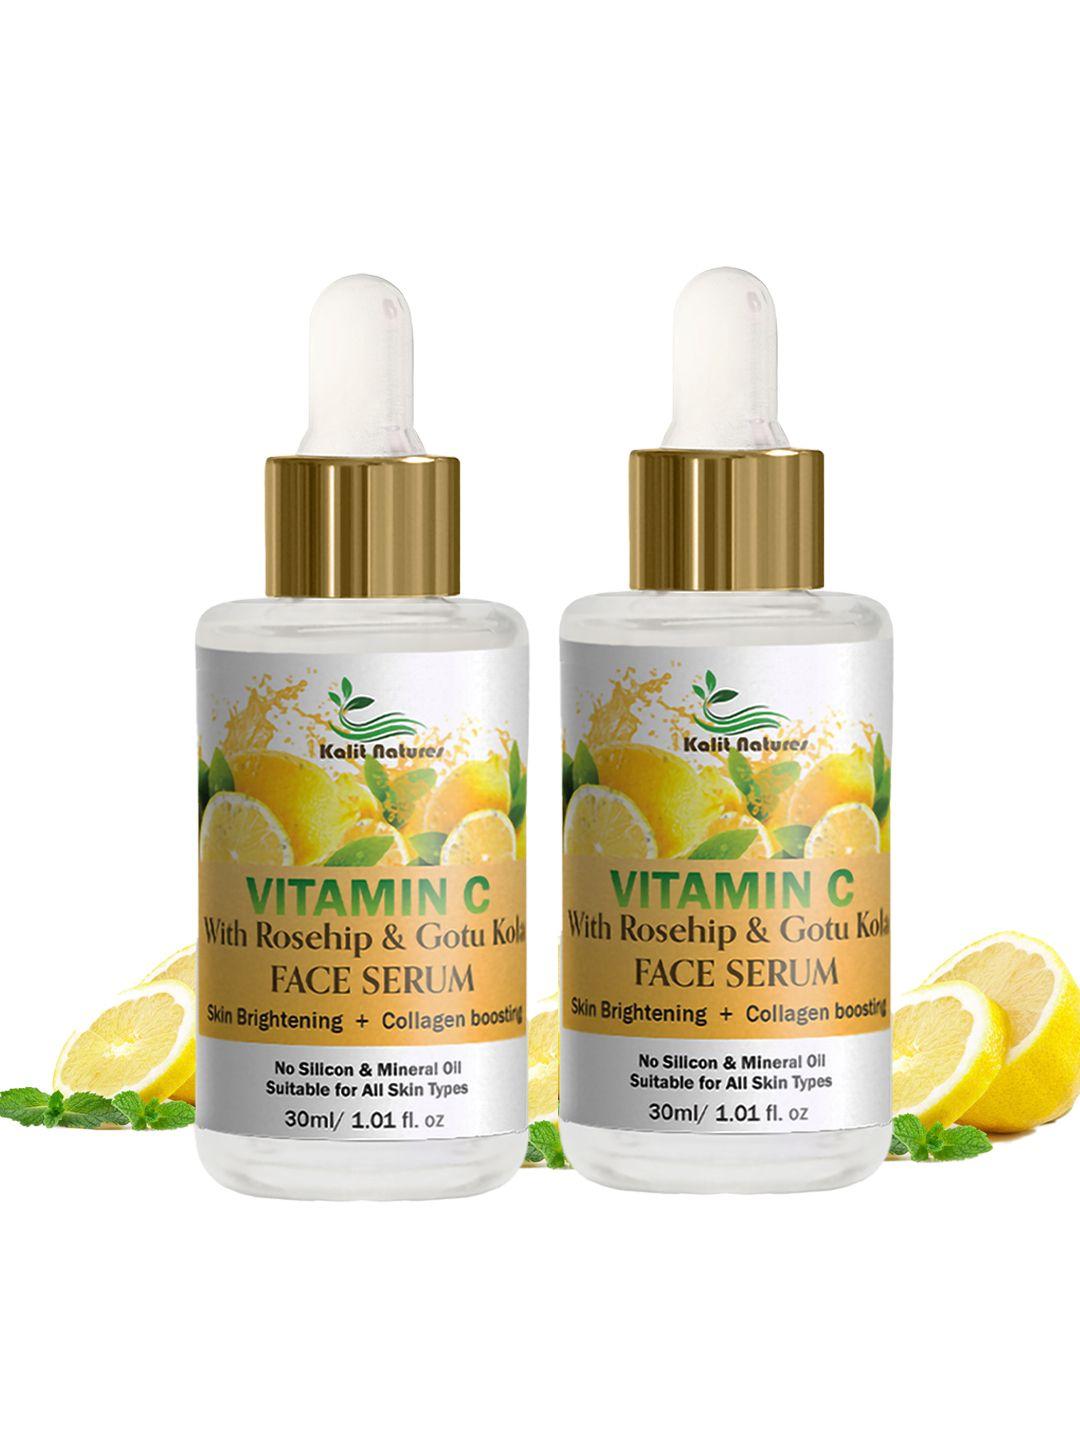 kalit natures set of 2 vitamin c face serum with rosehip & gotu kola - 30 ml each